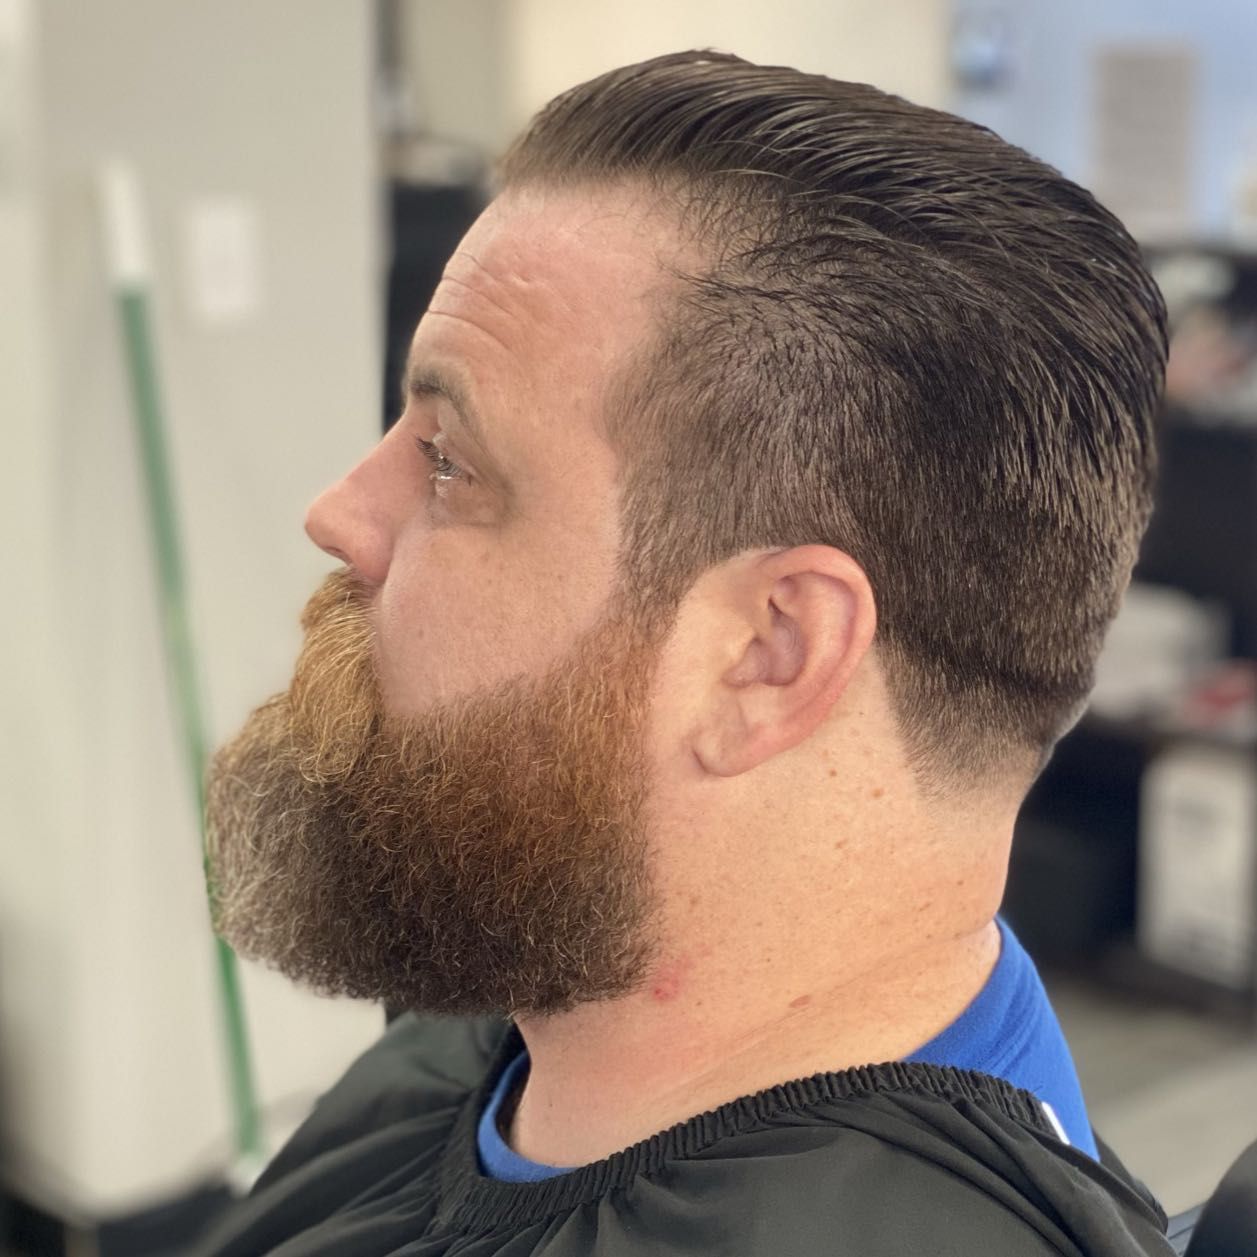 Haircut (bald fades) and Beard portfolio